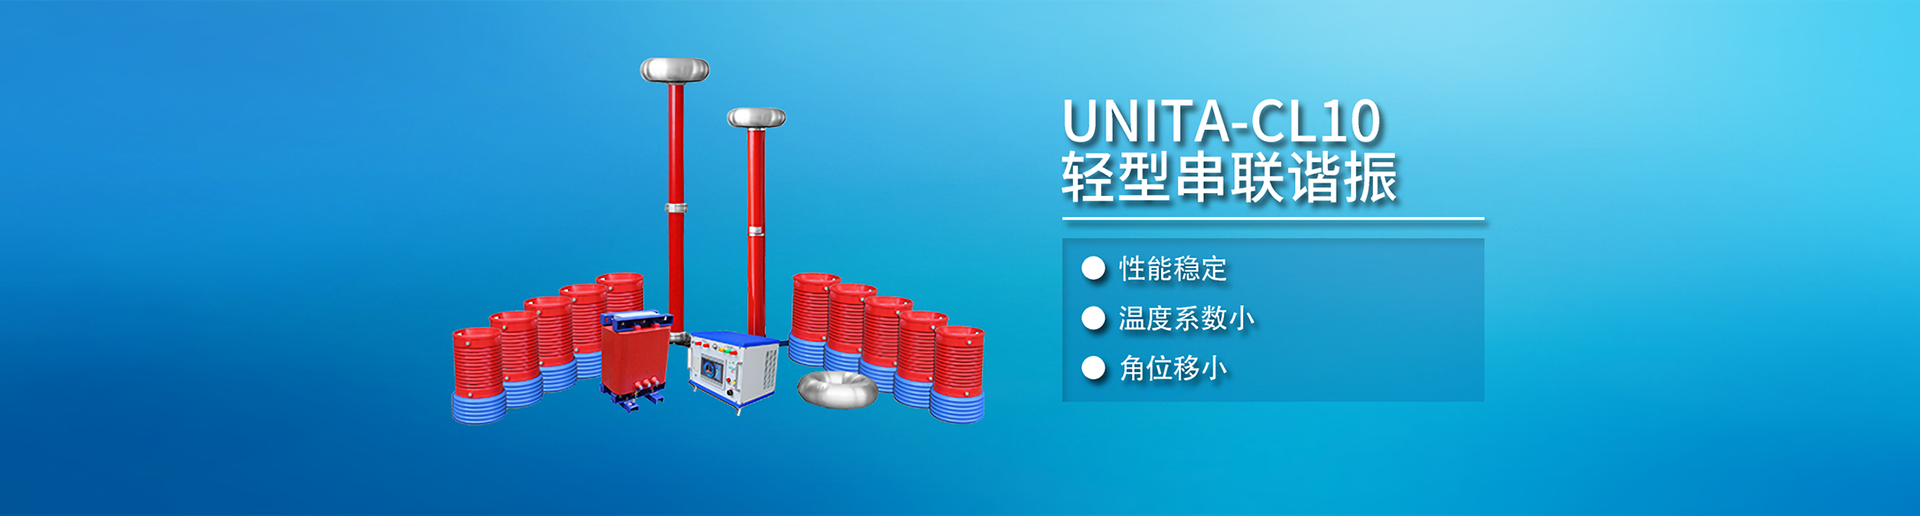 UNITA-CL10轻型串联谐振